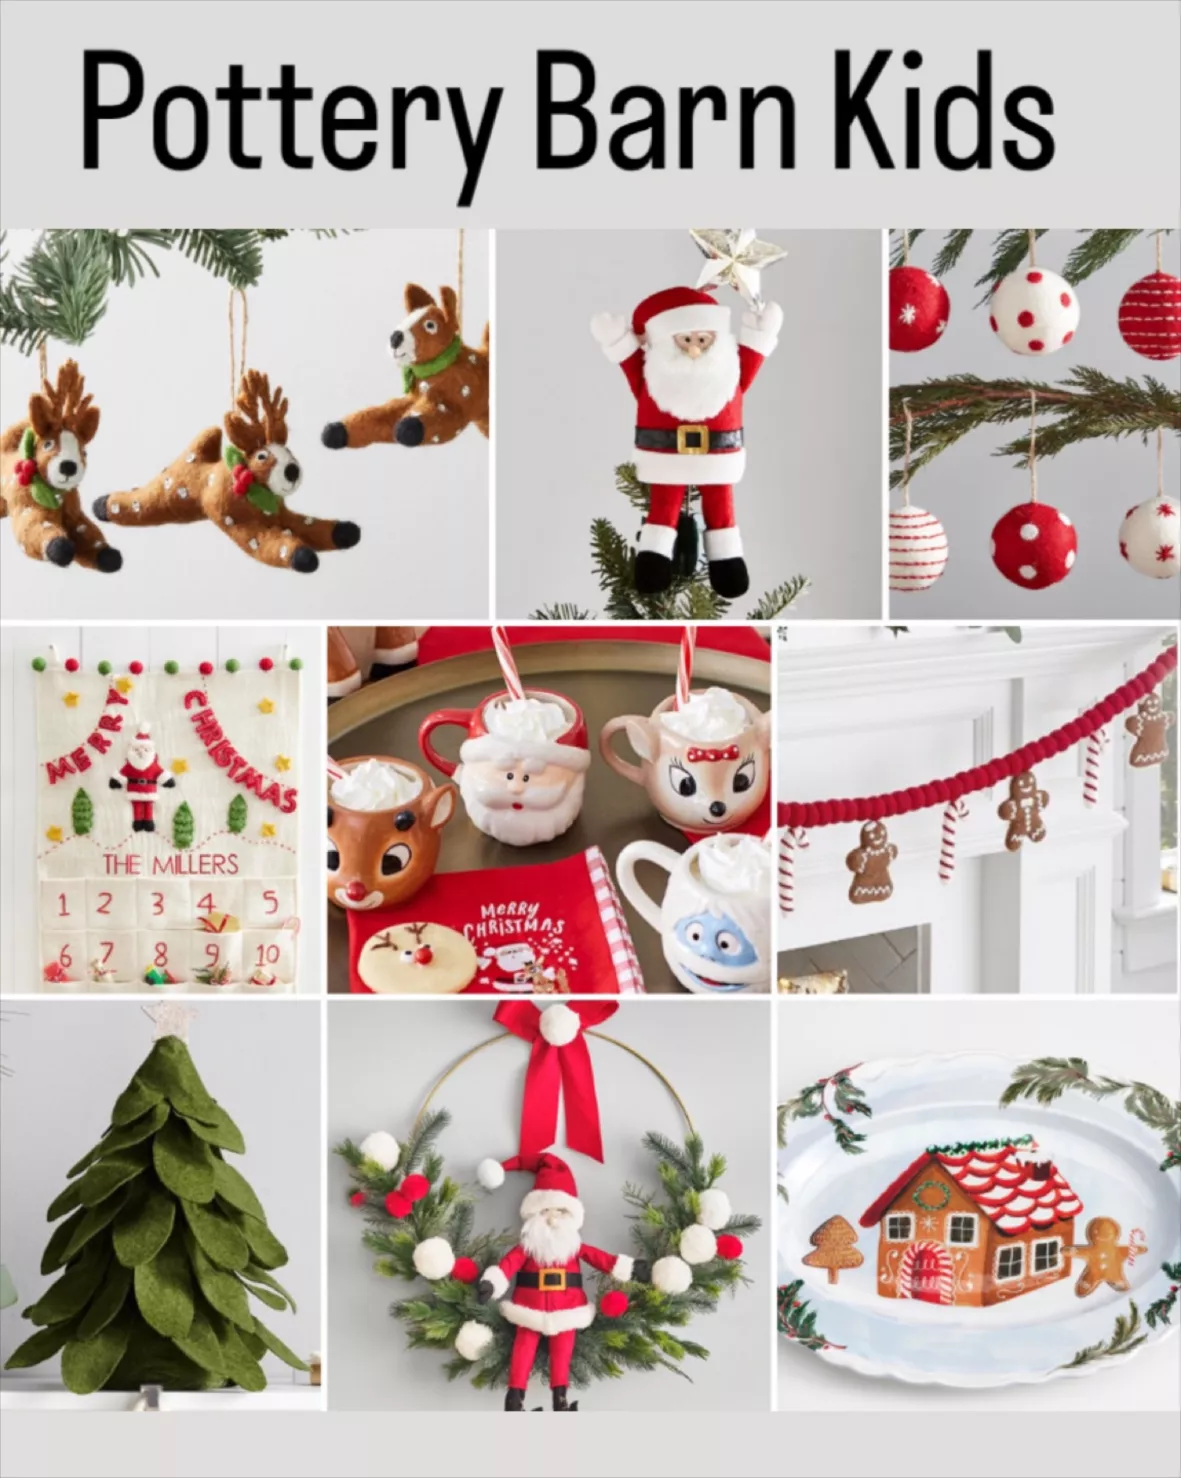 A Very Merry Pottery Barn Kids Christmas - Pottery Barn